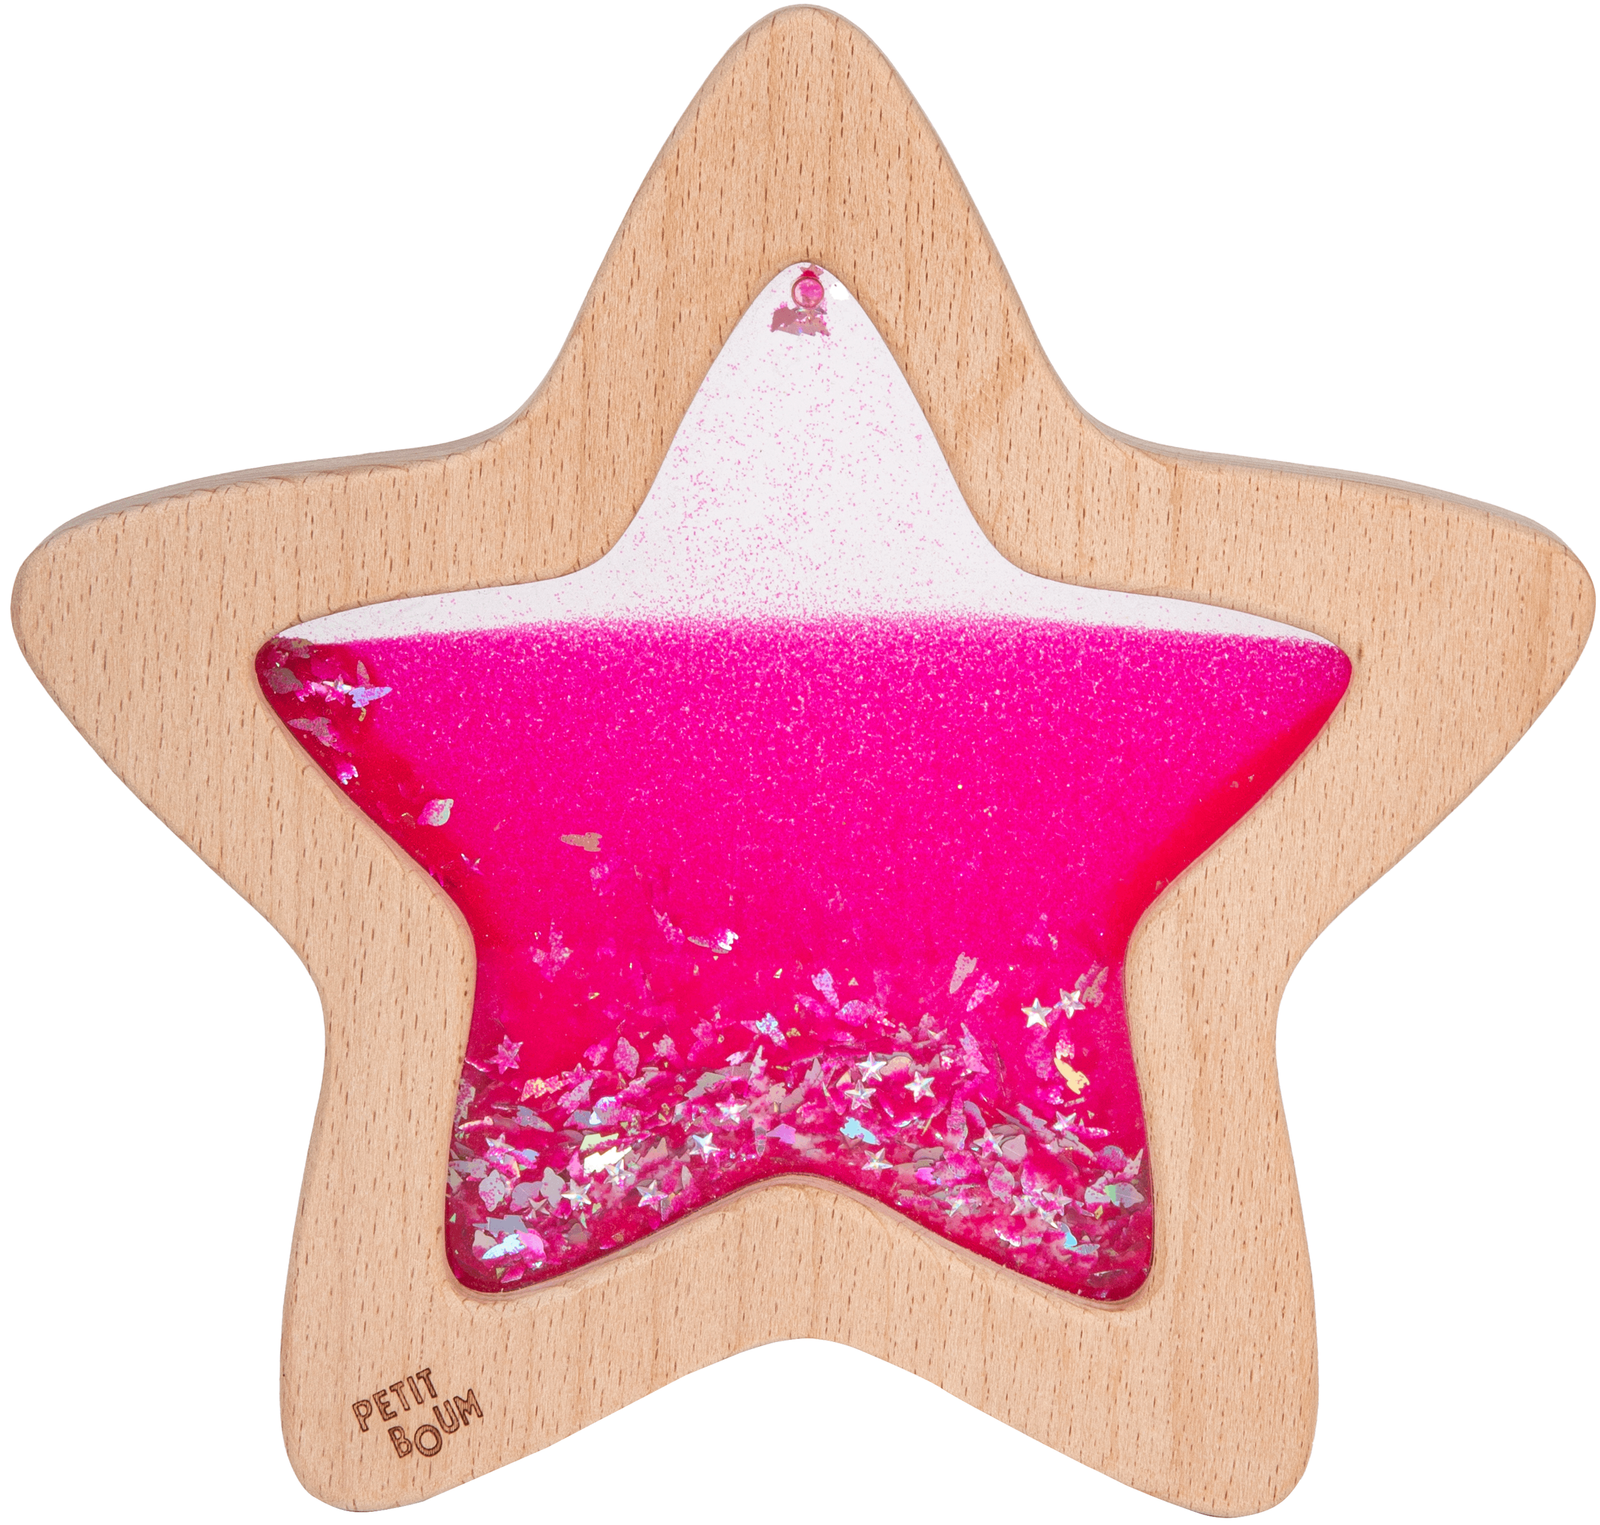 Petit boum: a sensory toy shining in the dark star